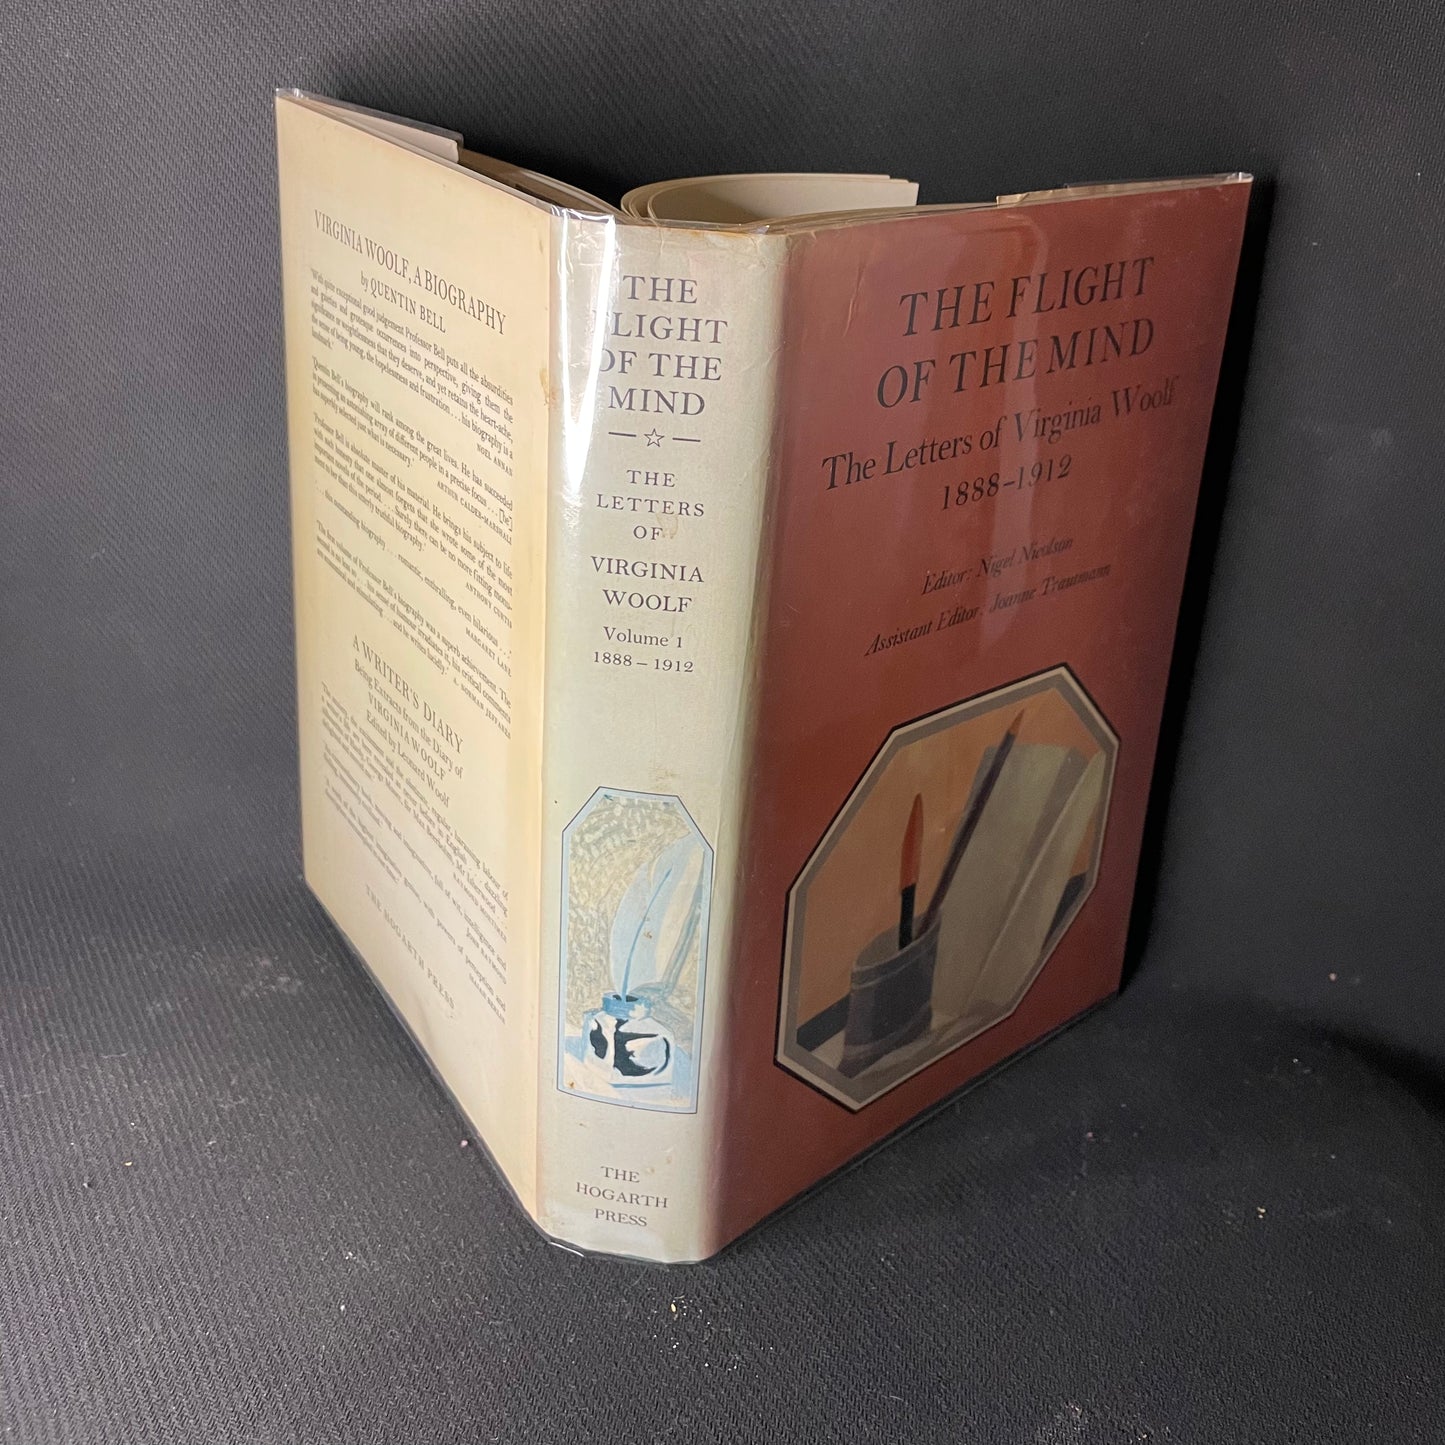 The Letters of Virginia Woolf, edited by Nigel Nicolson